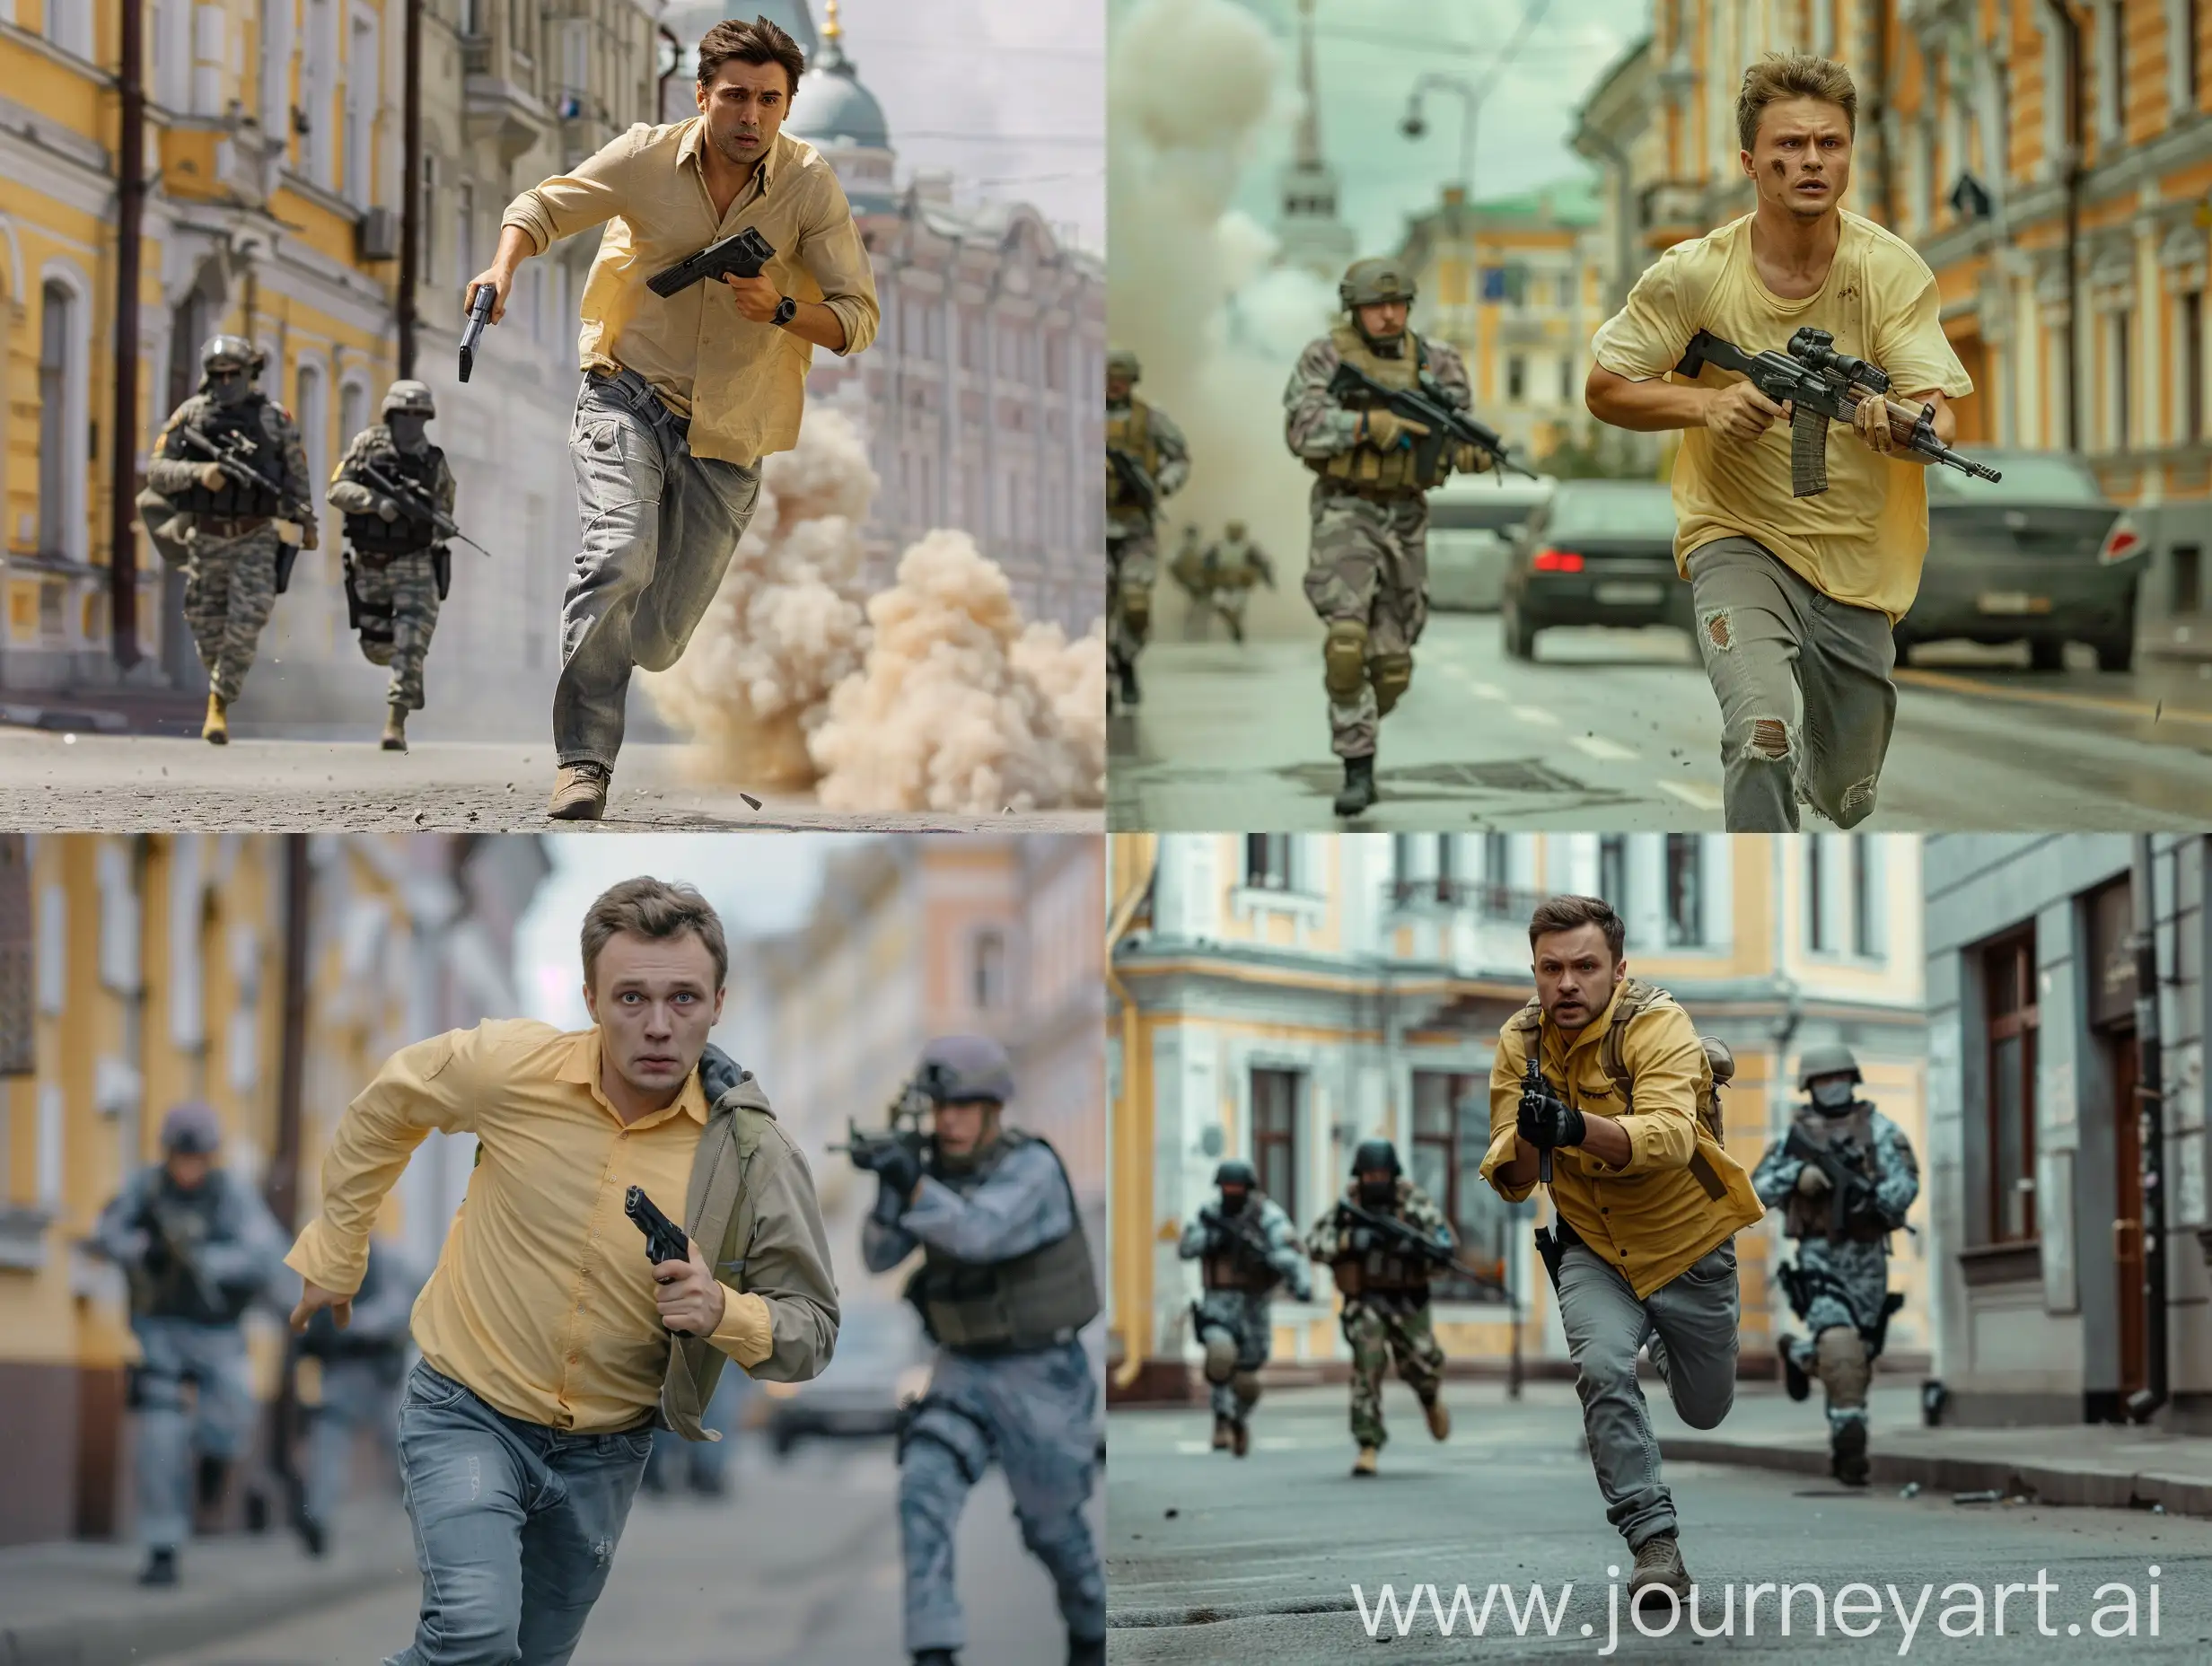 Man-with-TulskyTokarev-Pistol-Fleeing-Armed-Special-Forces-in-St-Petersburg